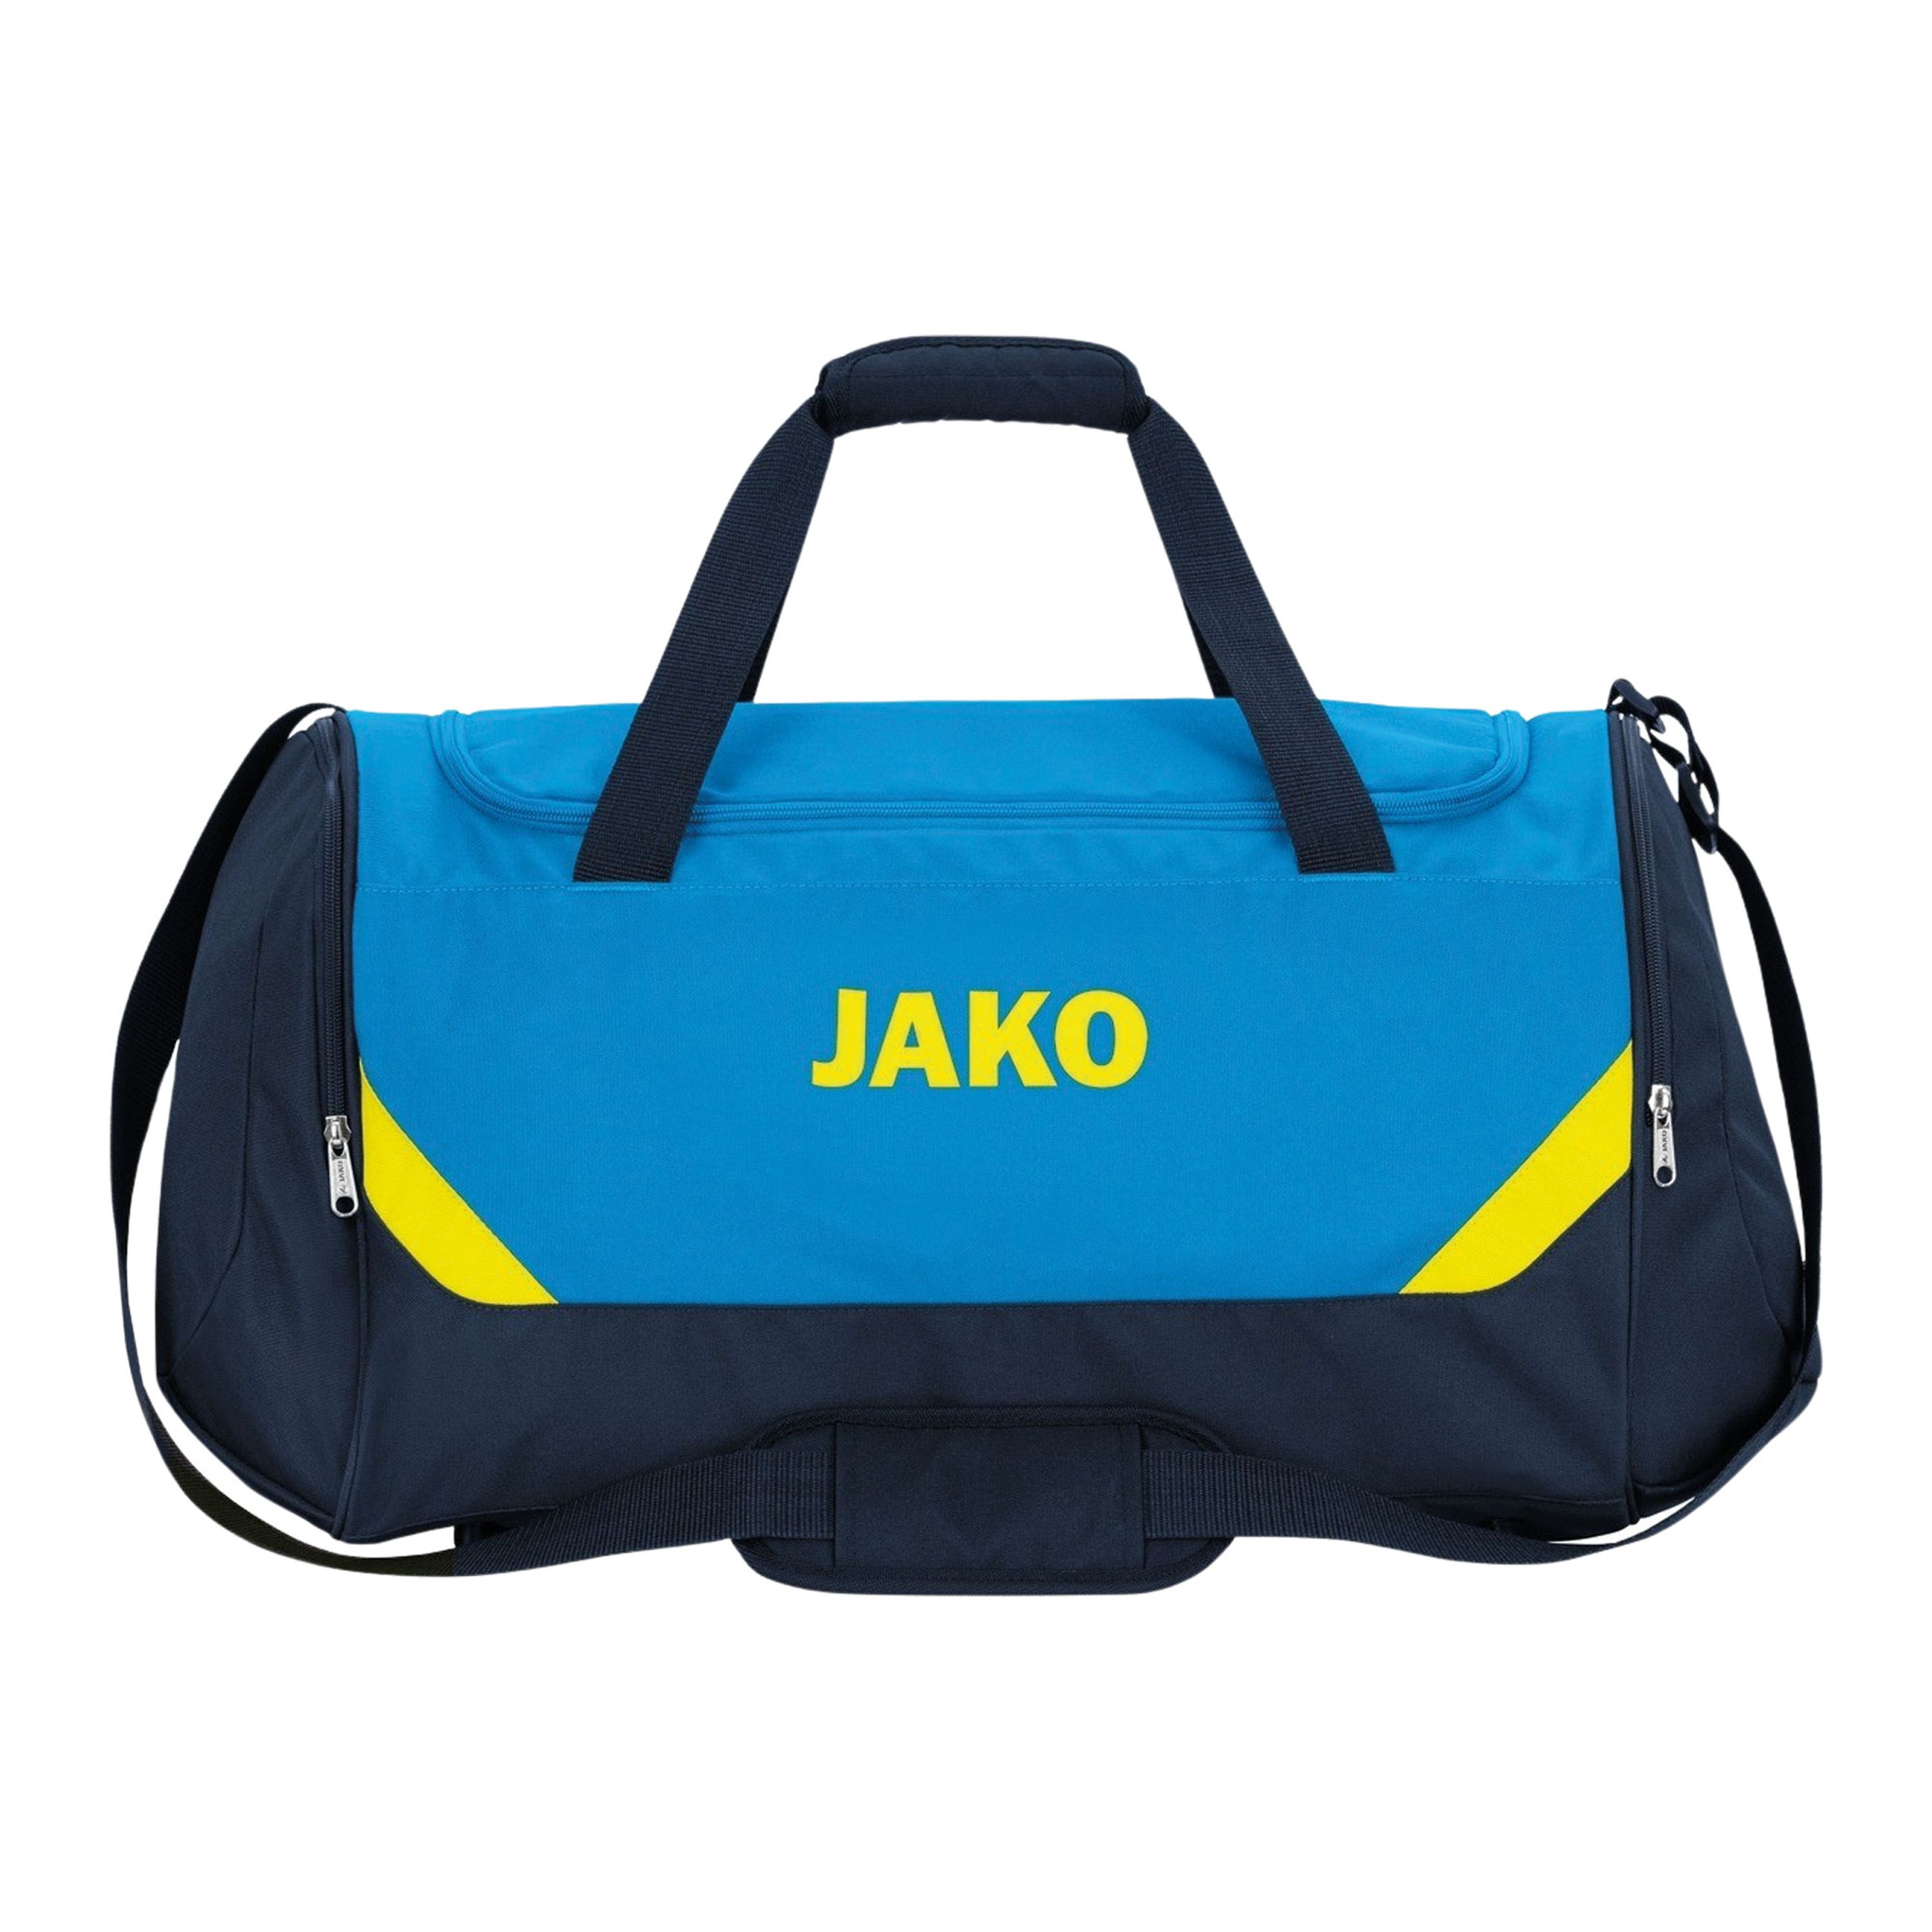 JAKO Iconic Sporttasche 444 - JAKO blau/marine/neongelb S (28 Liter)